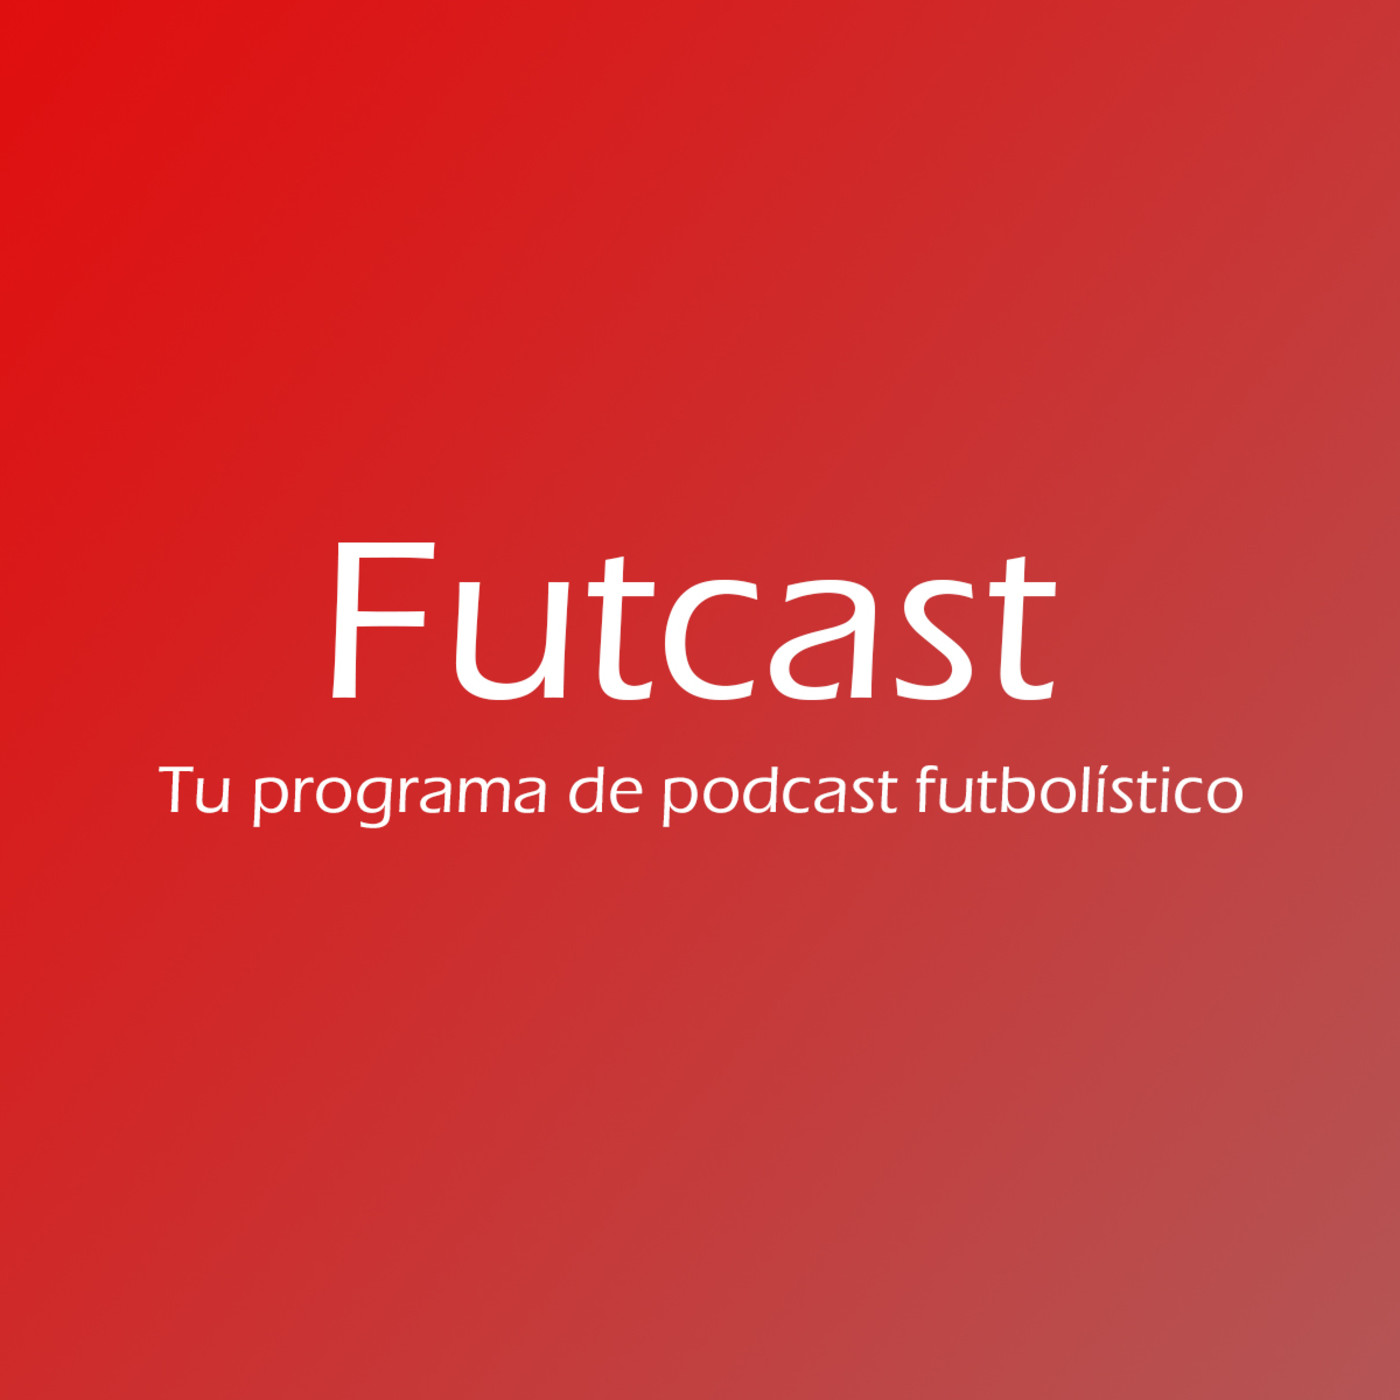 Futcast